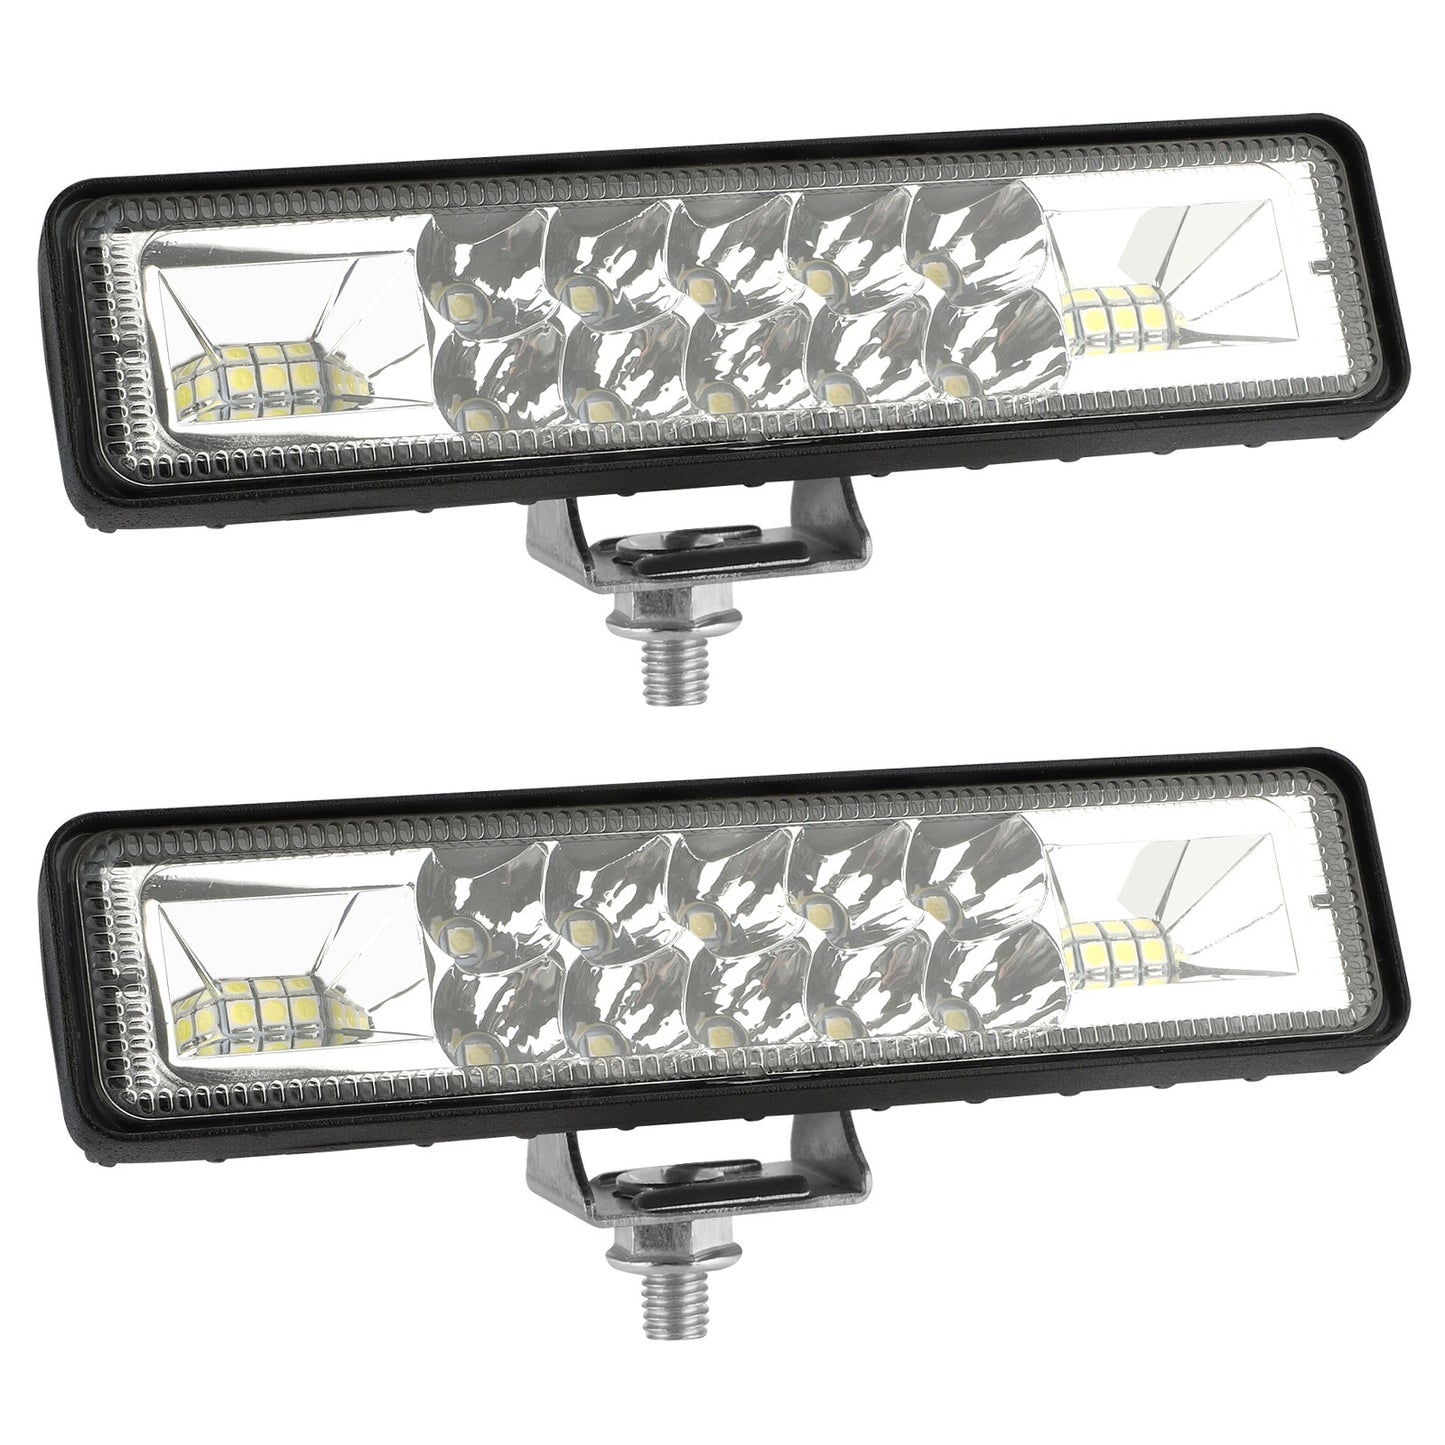 2Pcs 6-Inch LED Work Light Bar  - 1200LM, Waterproof, Long Lifespan, for trucks, off-road vehicles, and heavy equipment